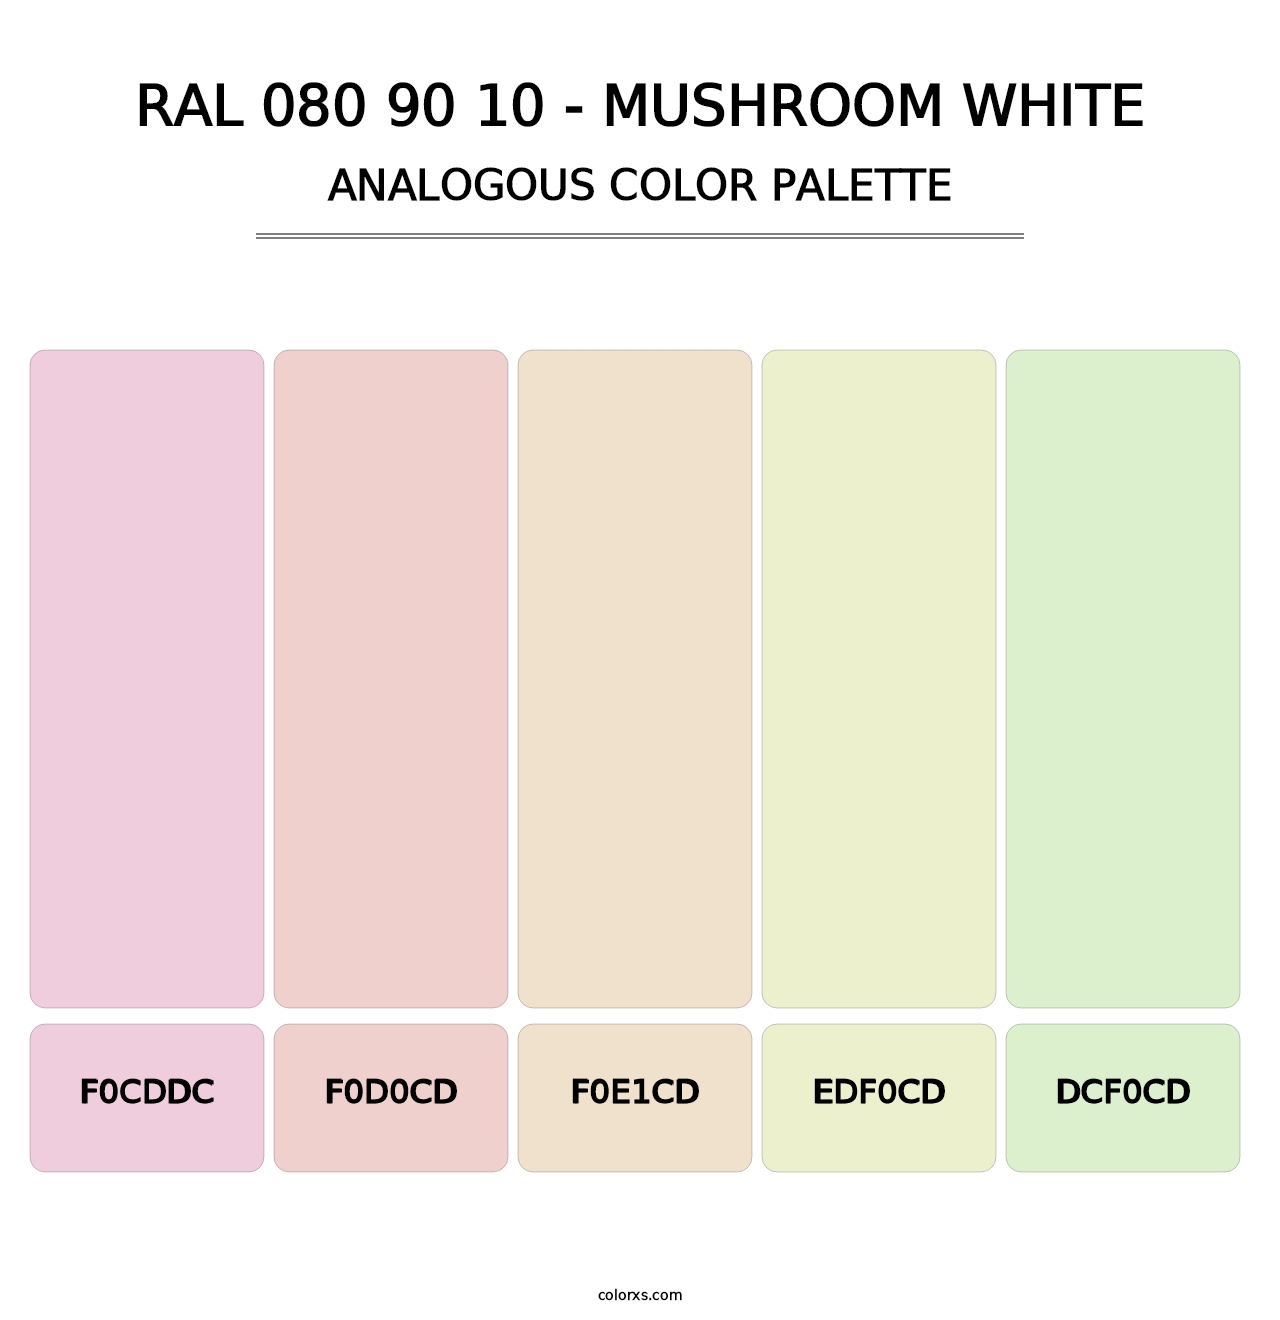 RAL 080 90 10 - Mushroom White - Analogous Color Palette